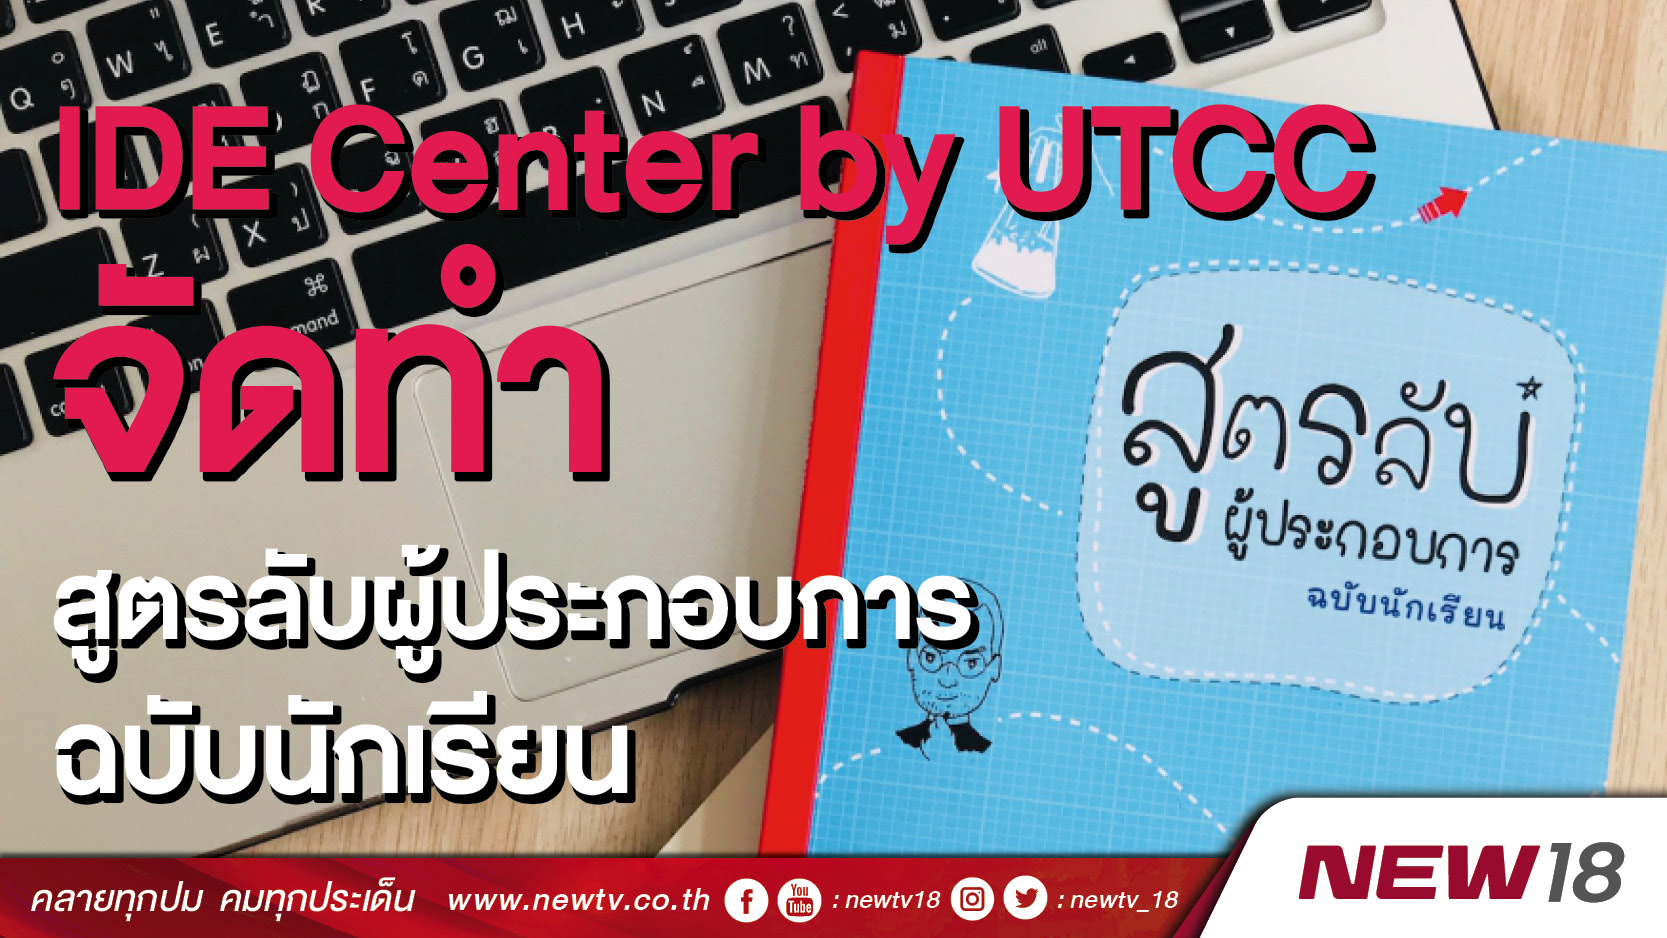 IDE Center by UTCC จัดทำ “สูตรลับผู้ประกอบการฉบับนักเรียน” รับนโยบายประเทศไทย 4.0 